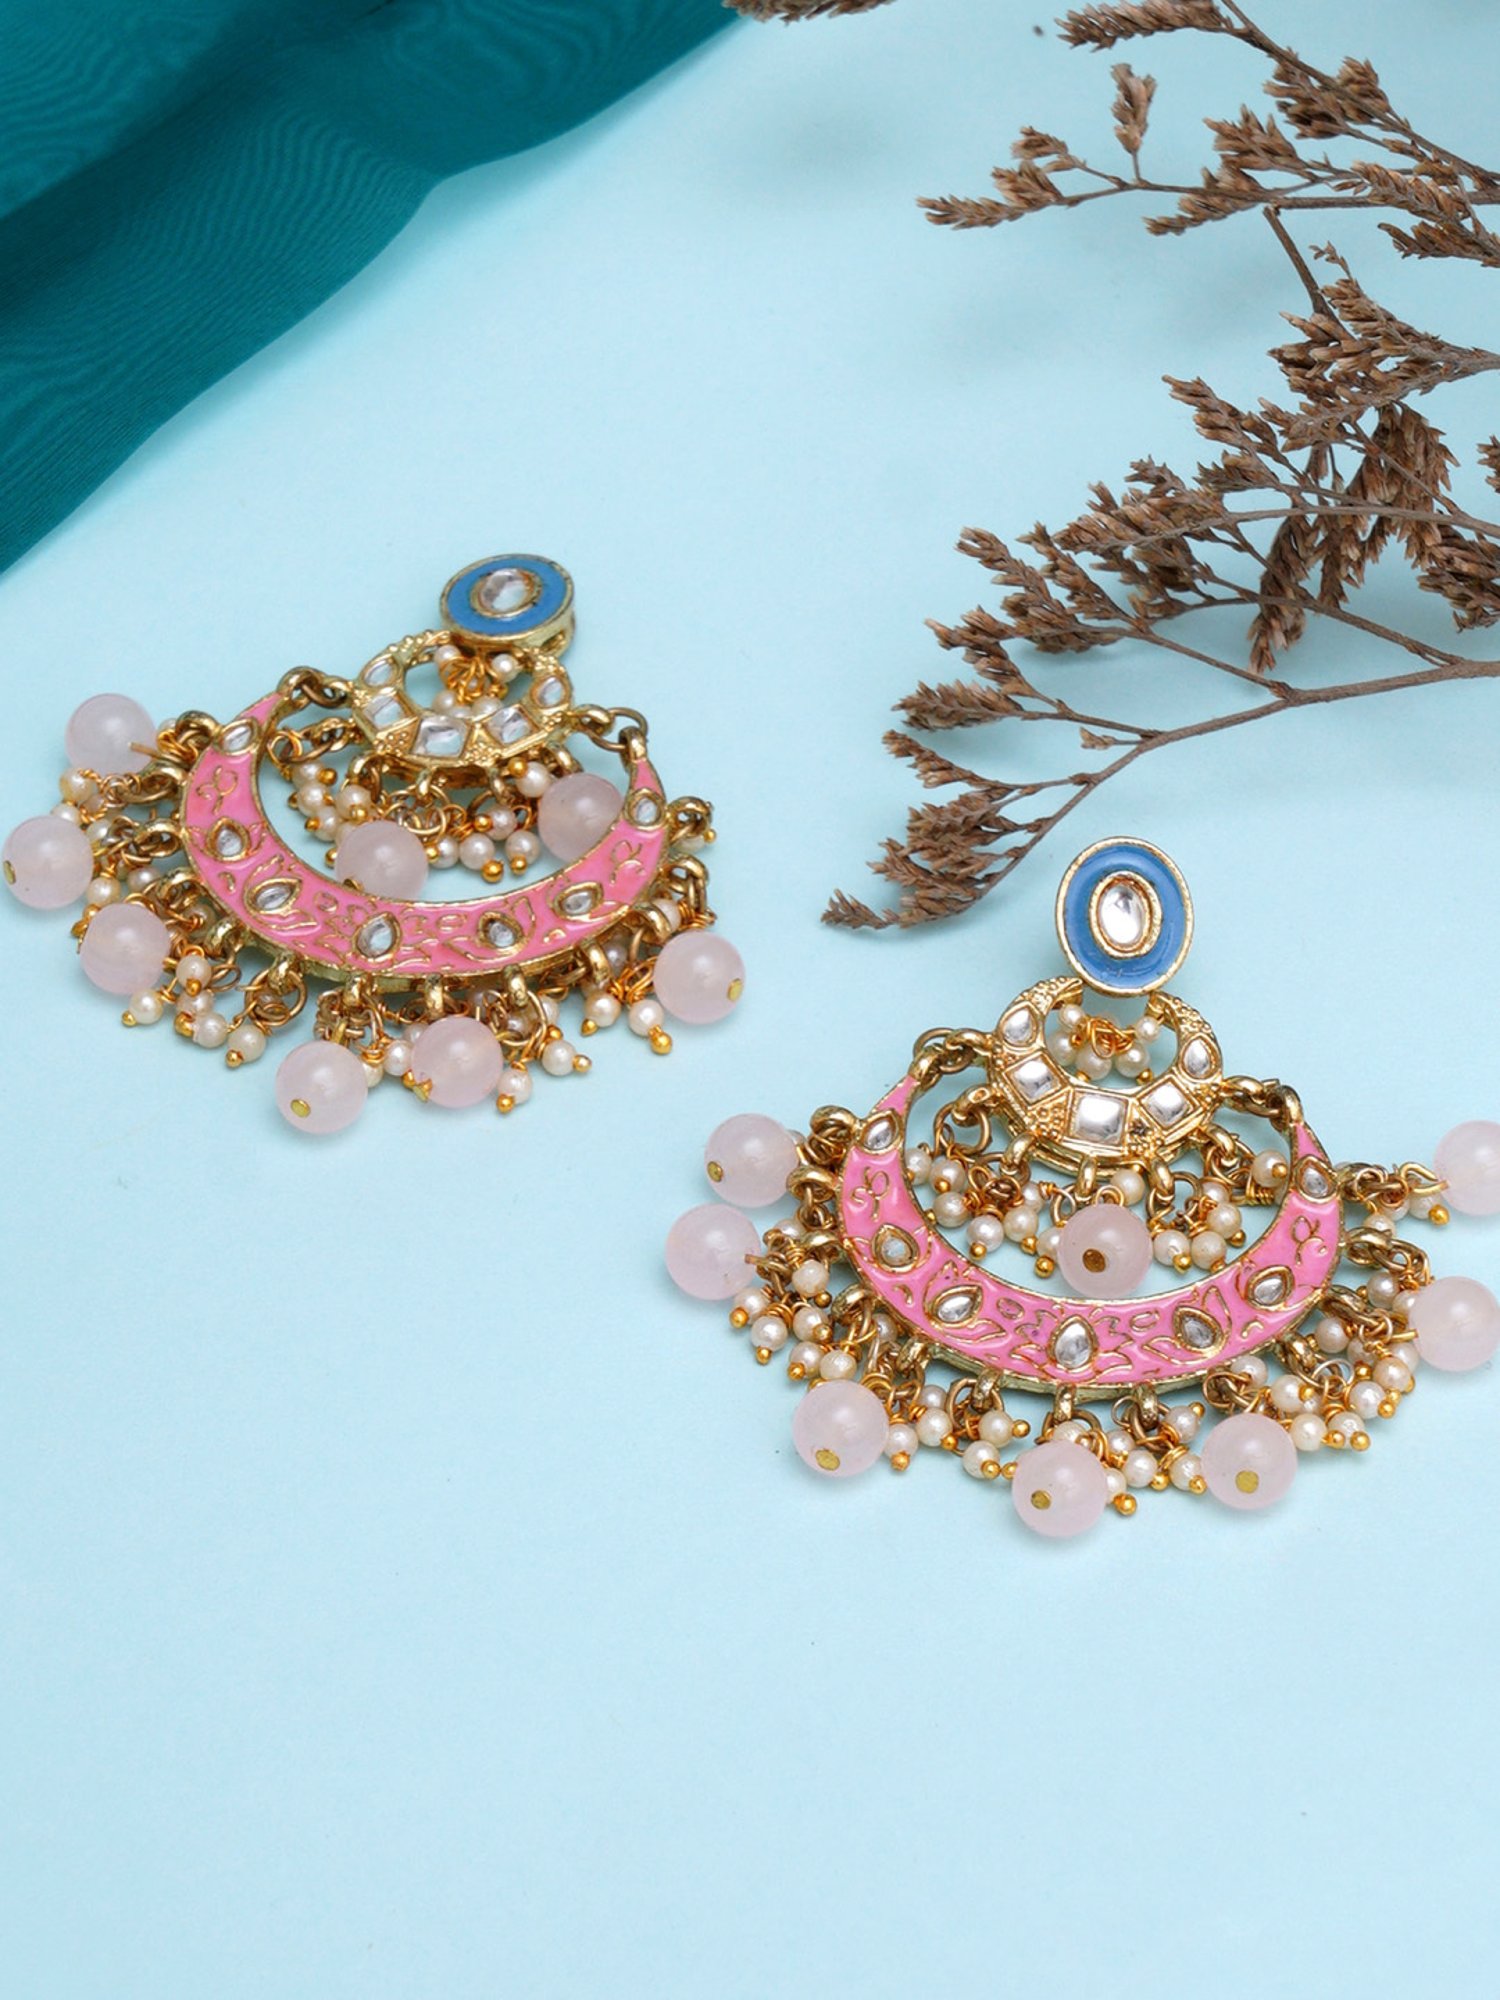 Gorgeous Nathdwara enamel drop earrings in blue and pink enamel. – Lai